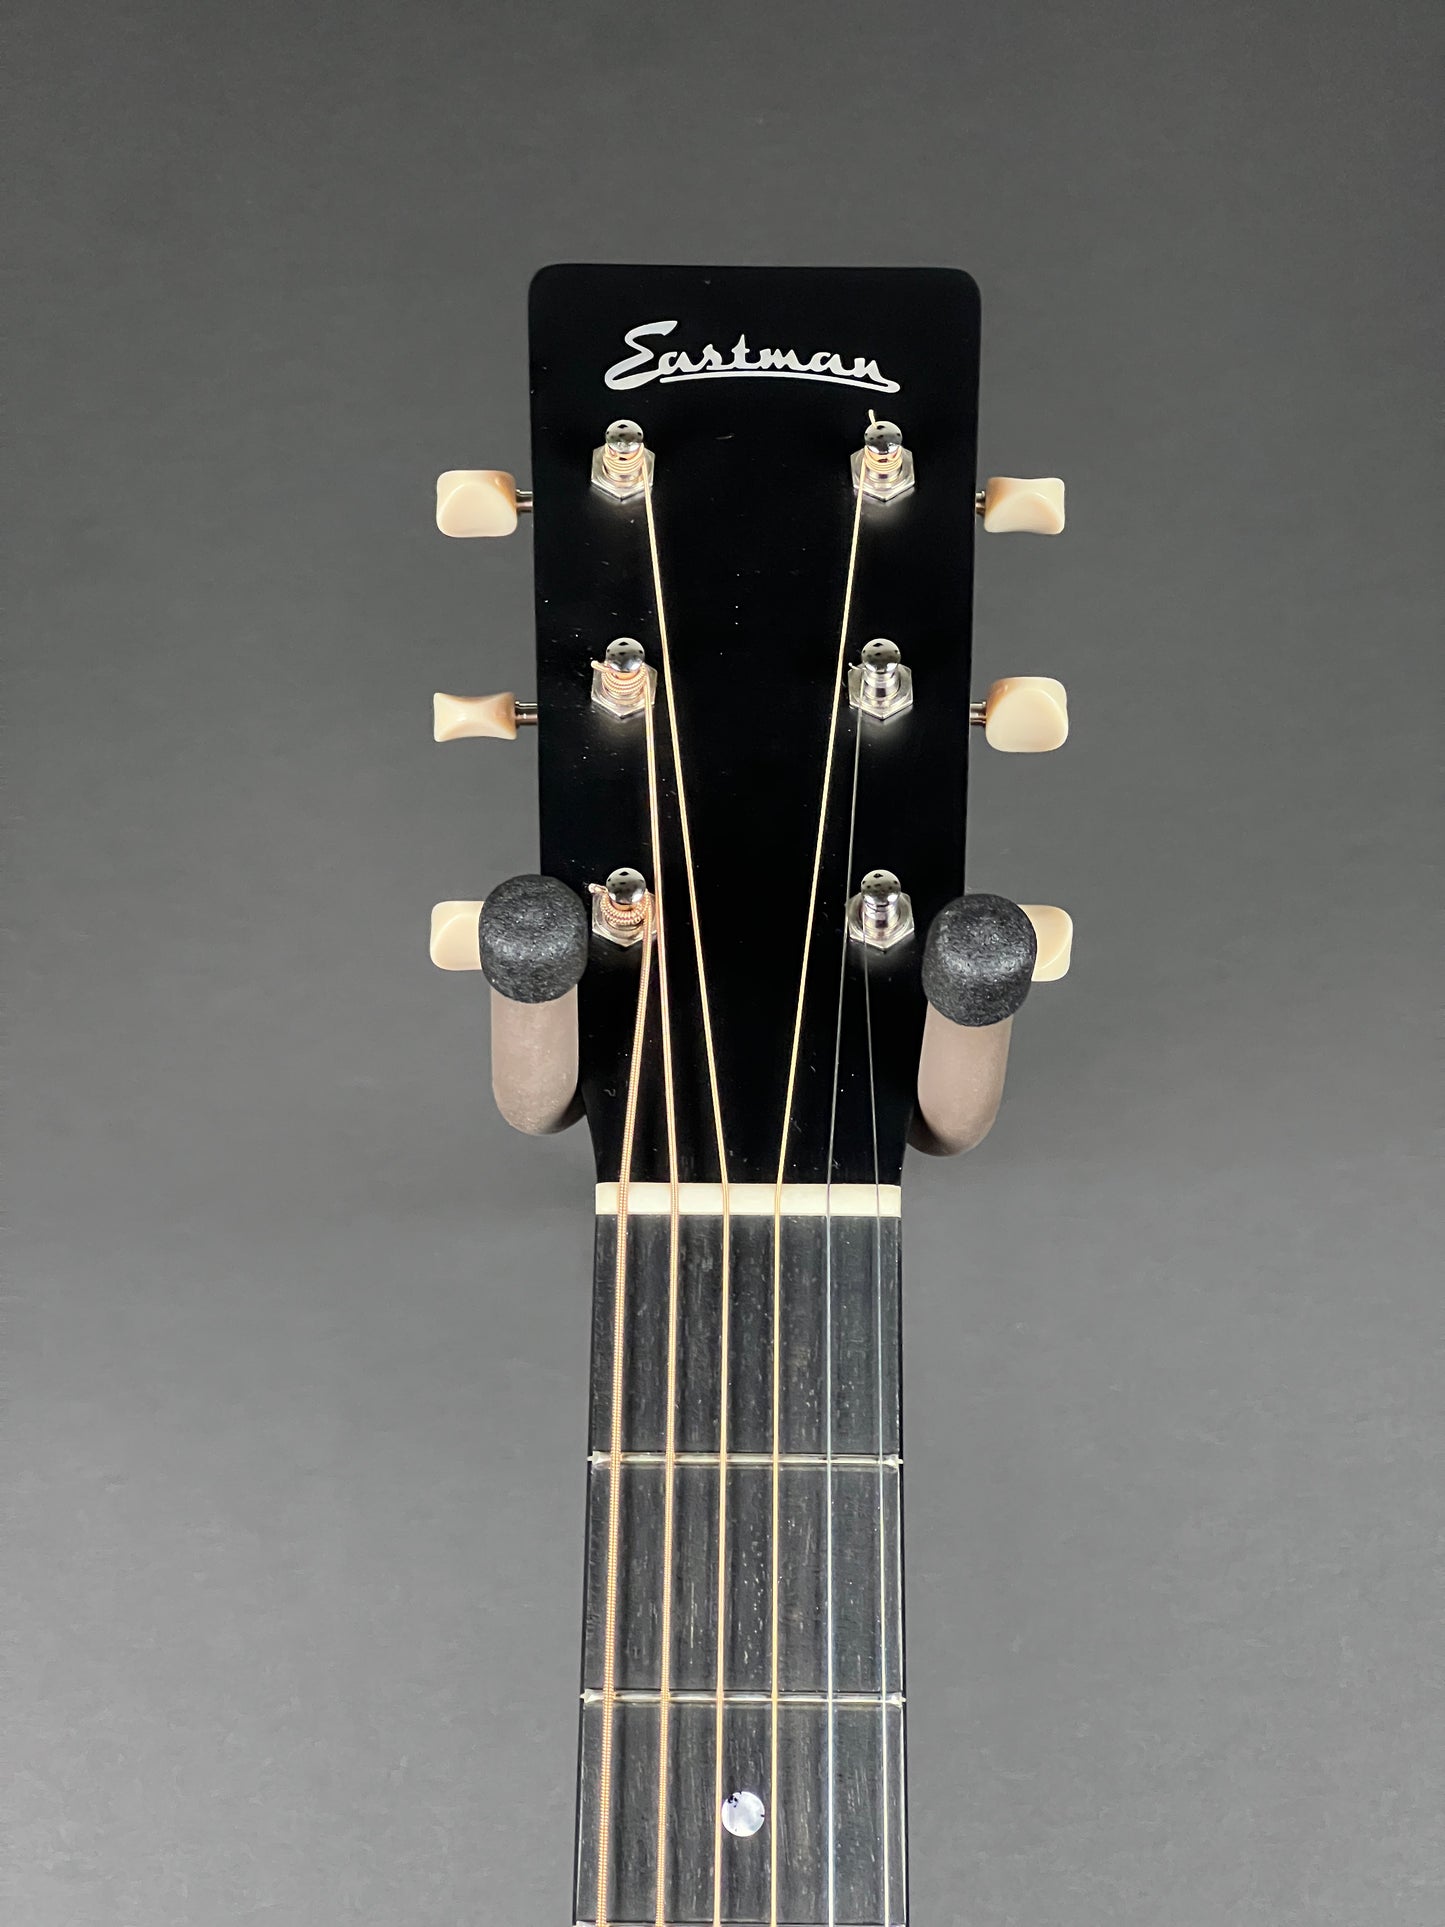 SOLD - Eastman E3DE Acoustic/Electric Dreadnought Guitar - Used